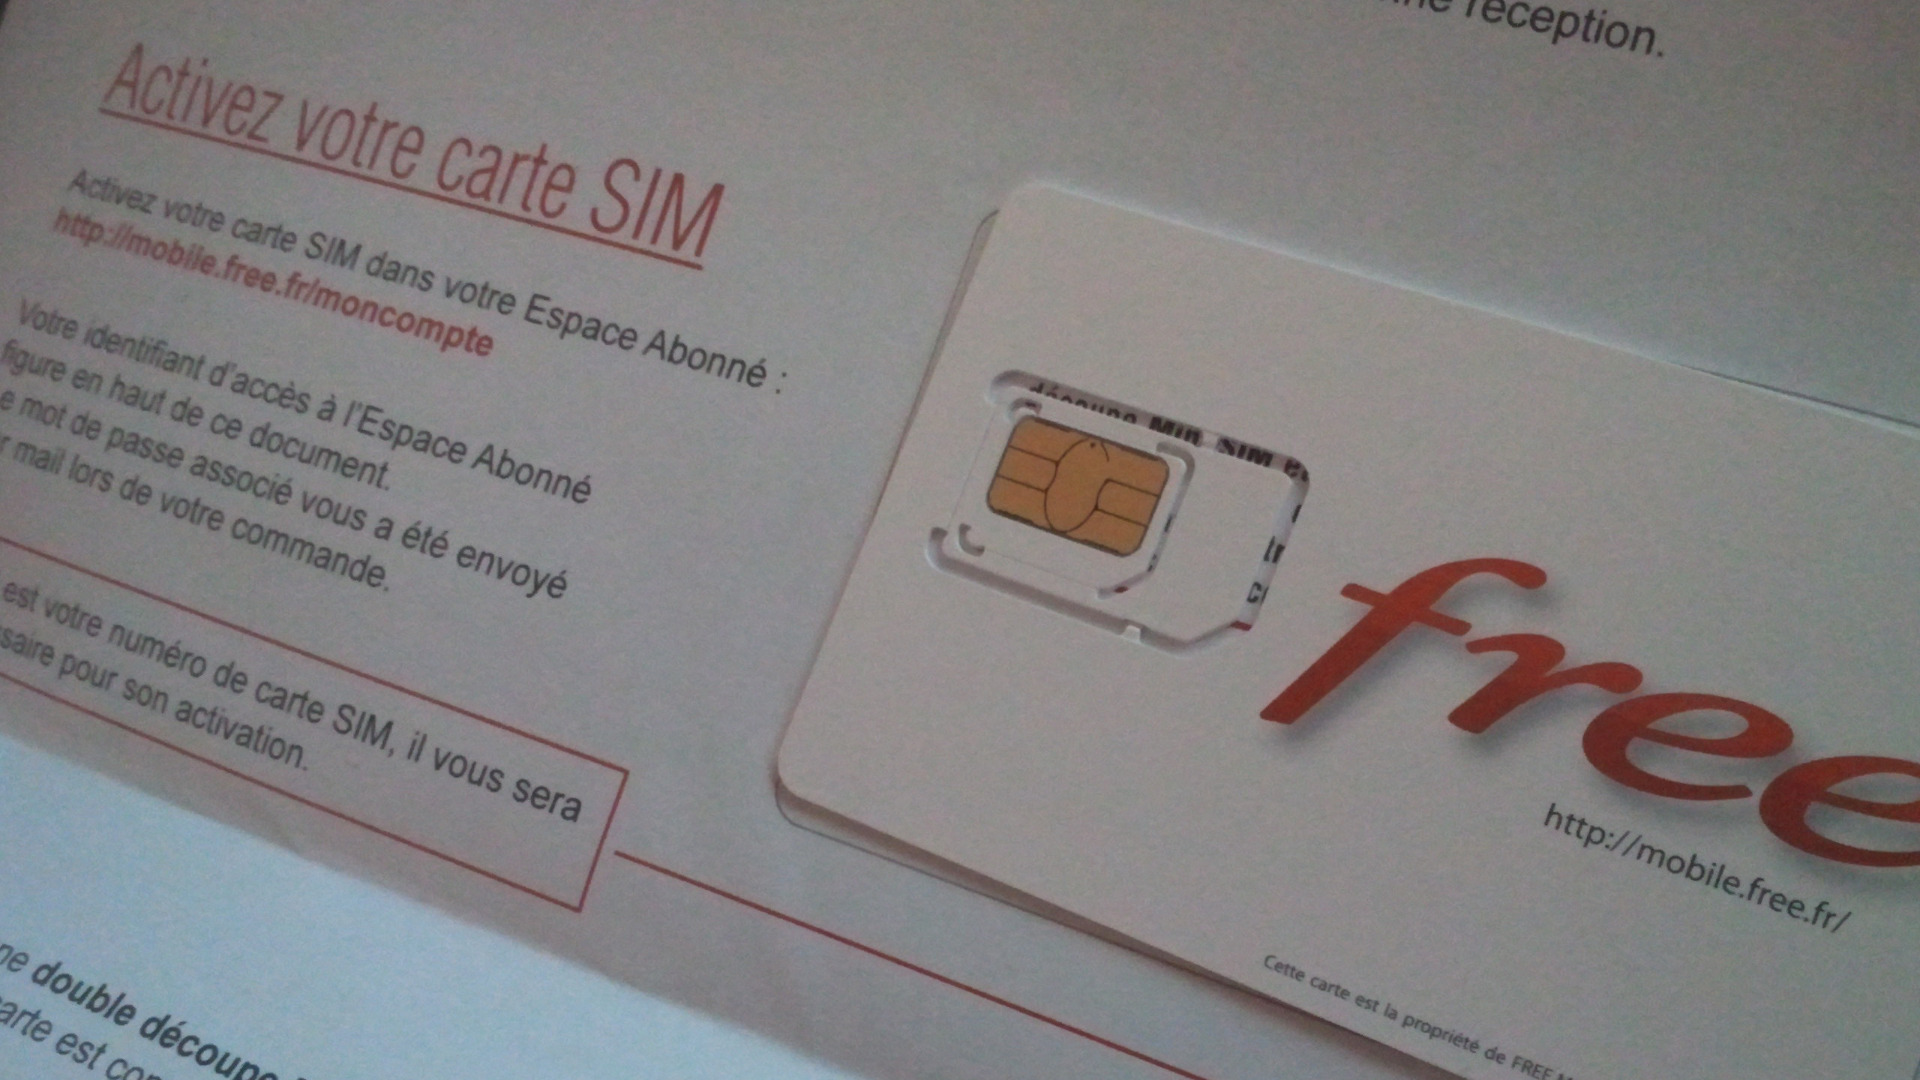 Activation carte SIM Free Mobile - Blog de Geek